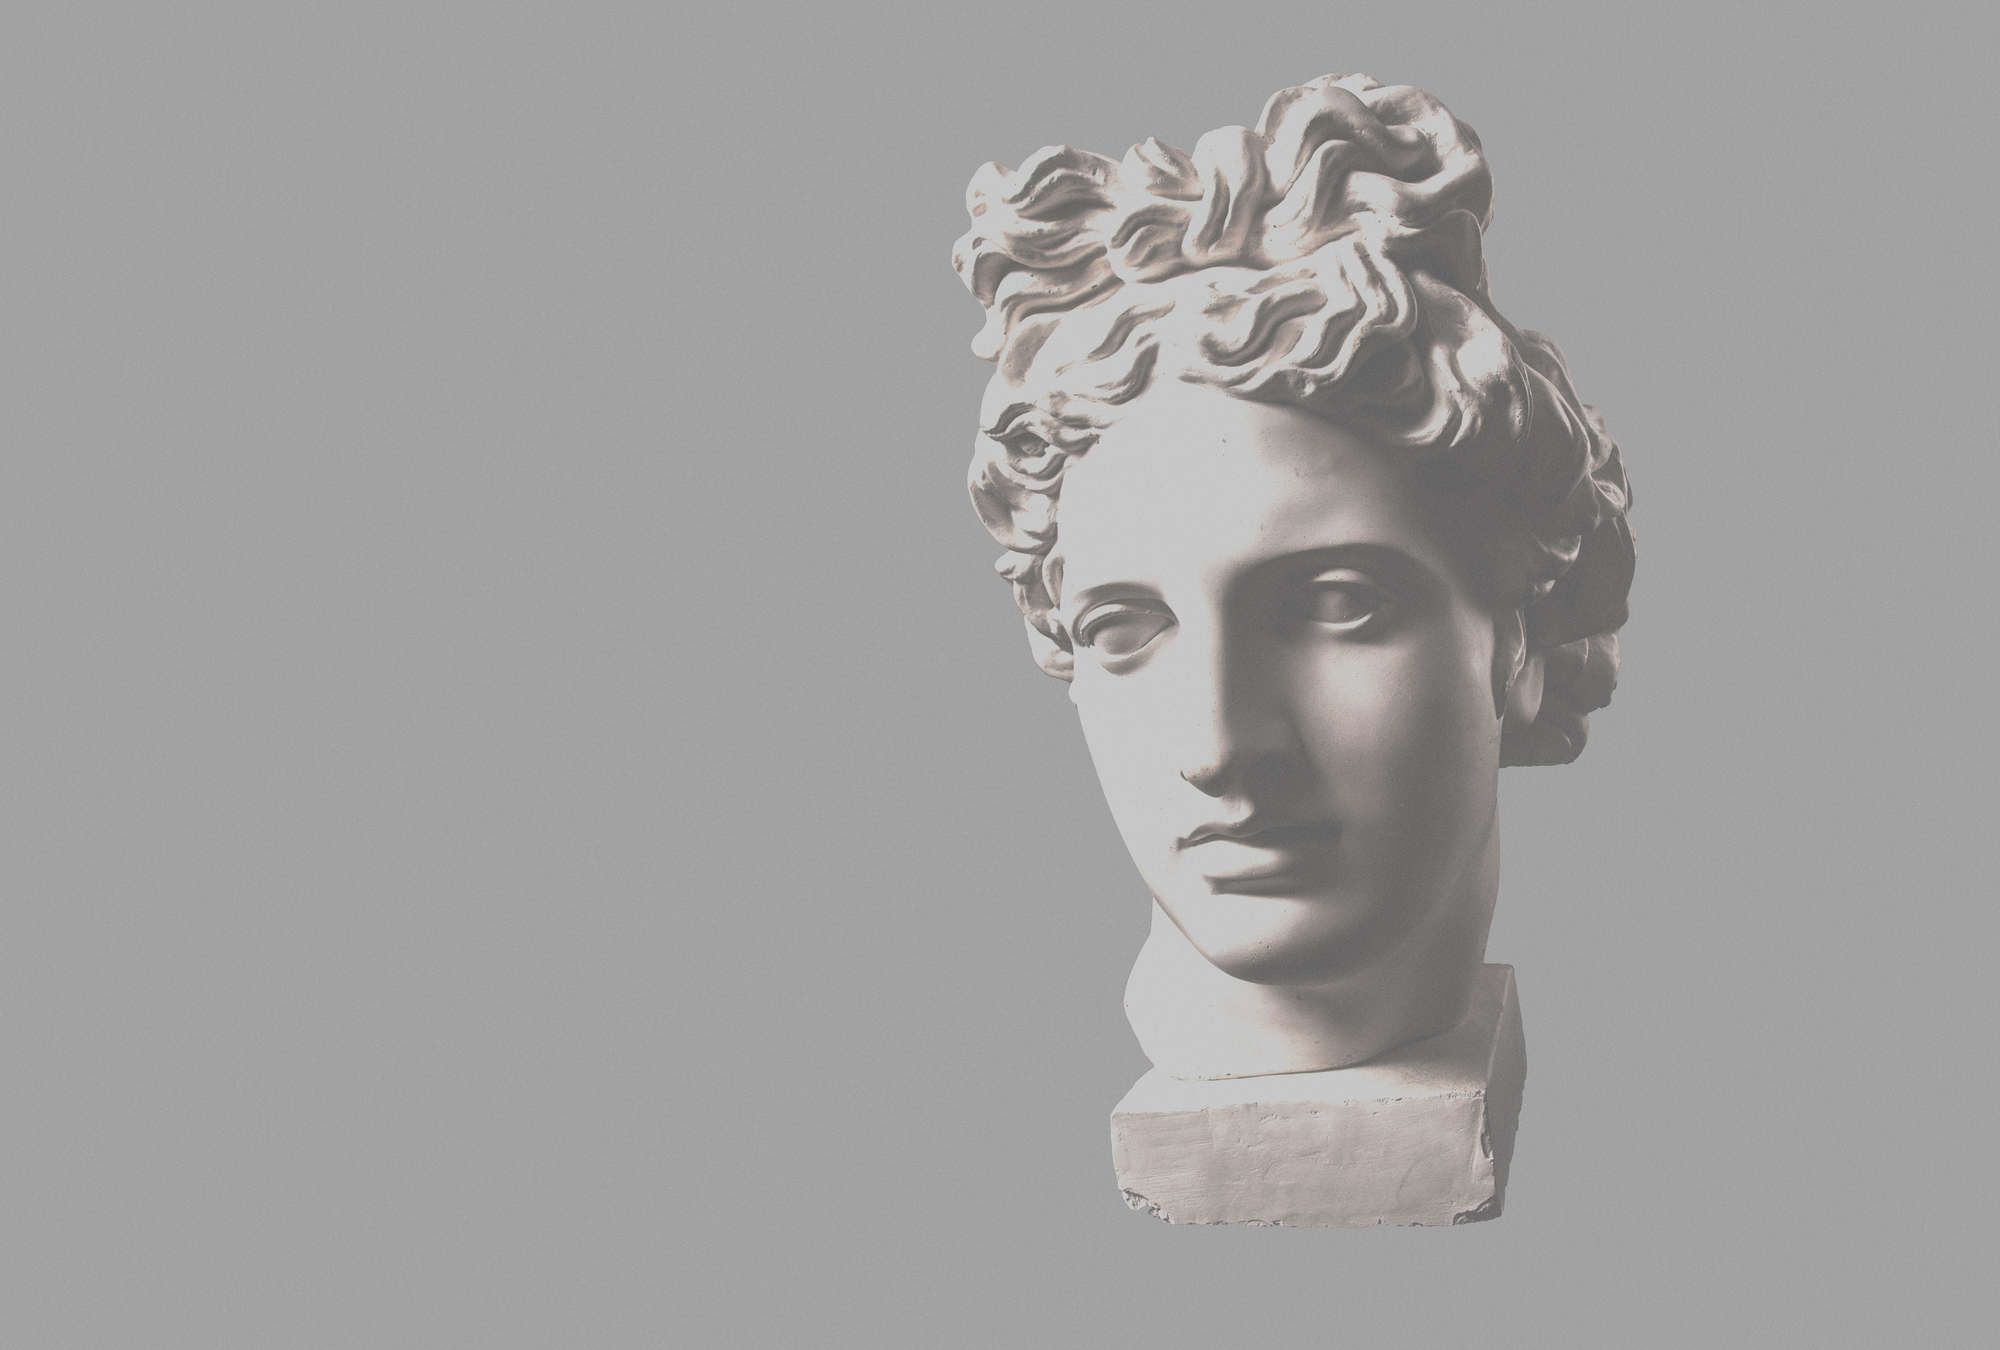             Fotomural »venus« - busto femenino antiguo - Material no tejido ligeramente texturado
        